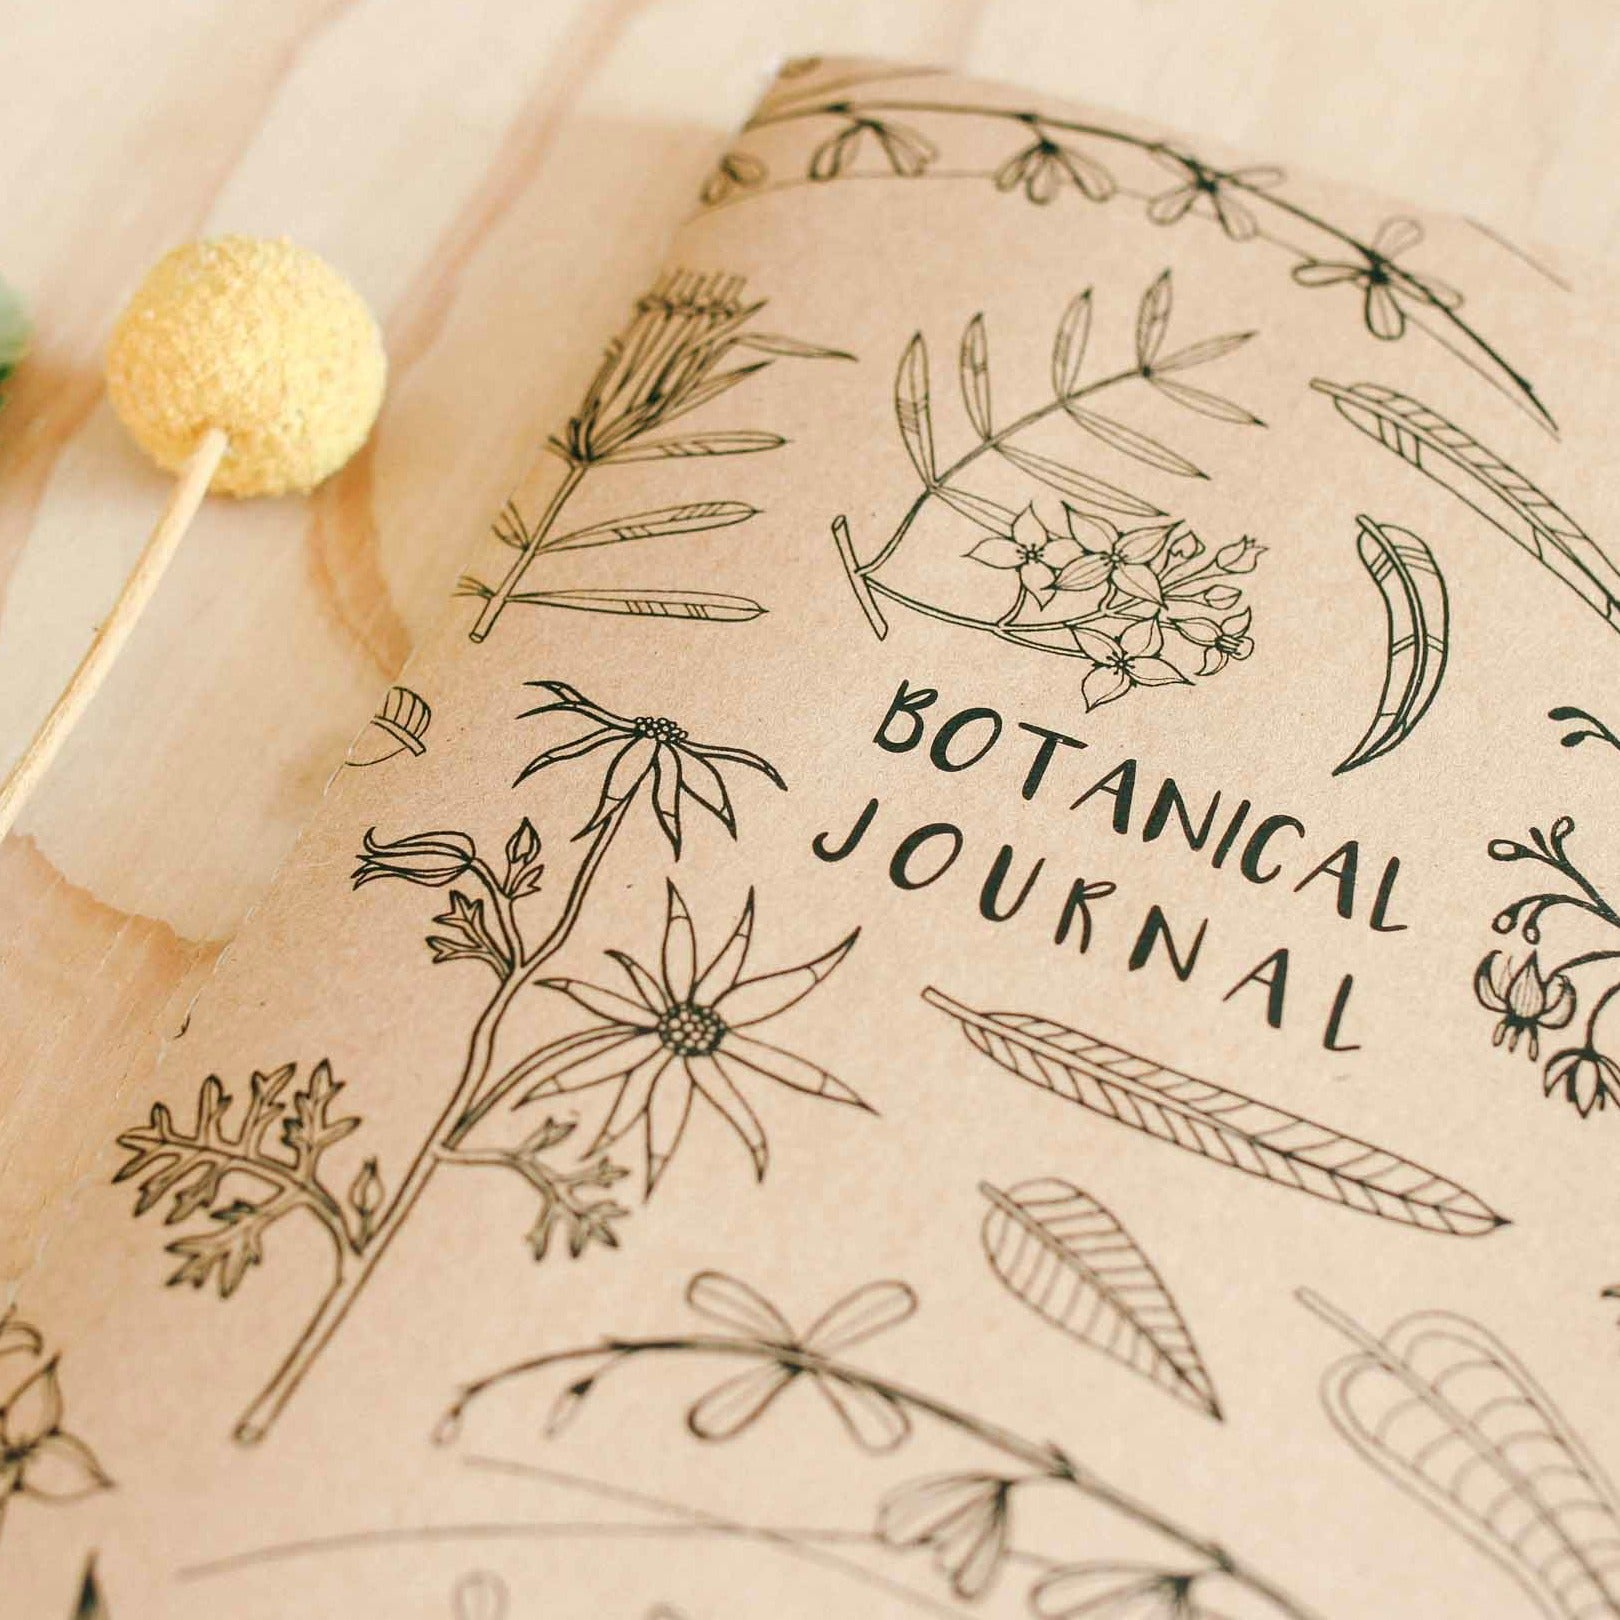 Botanical Journal - Tribe Castlemaine